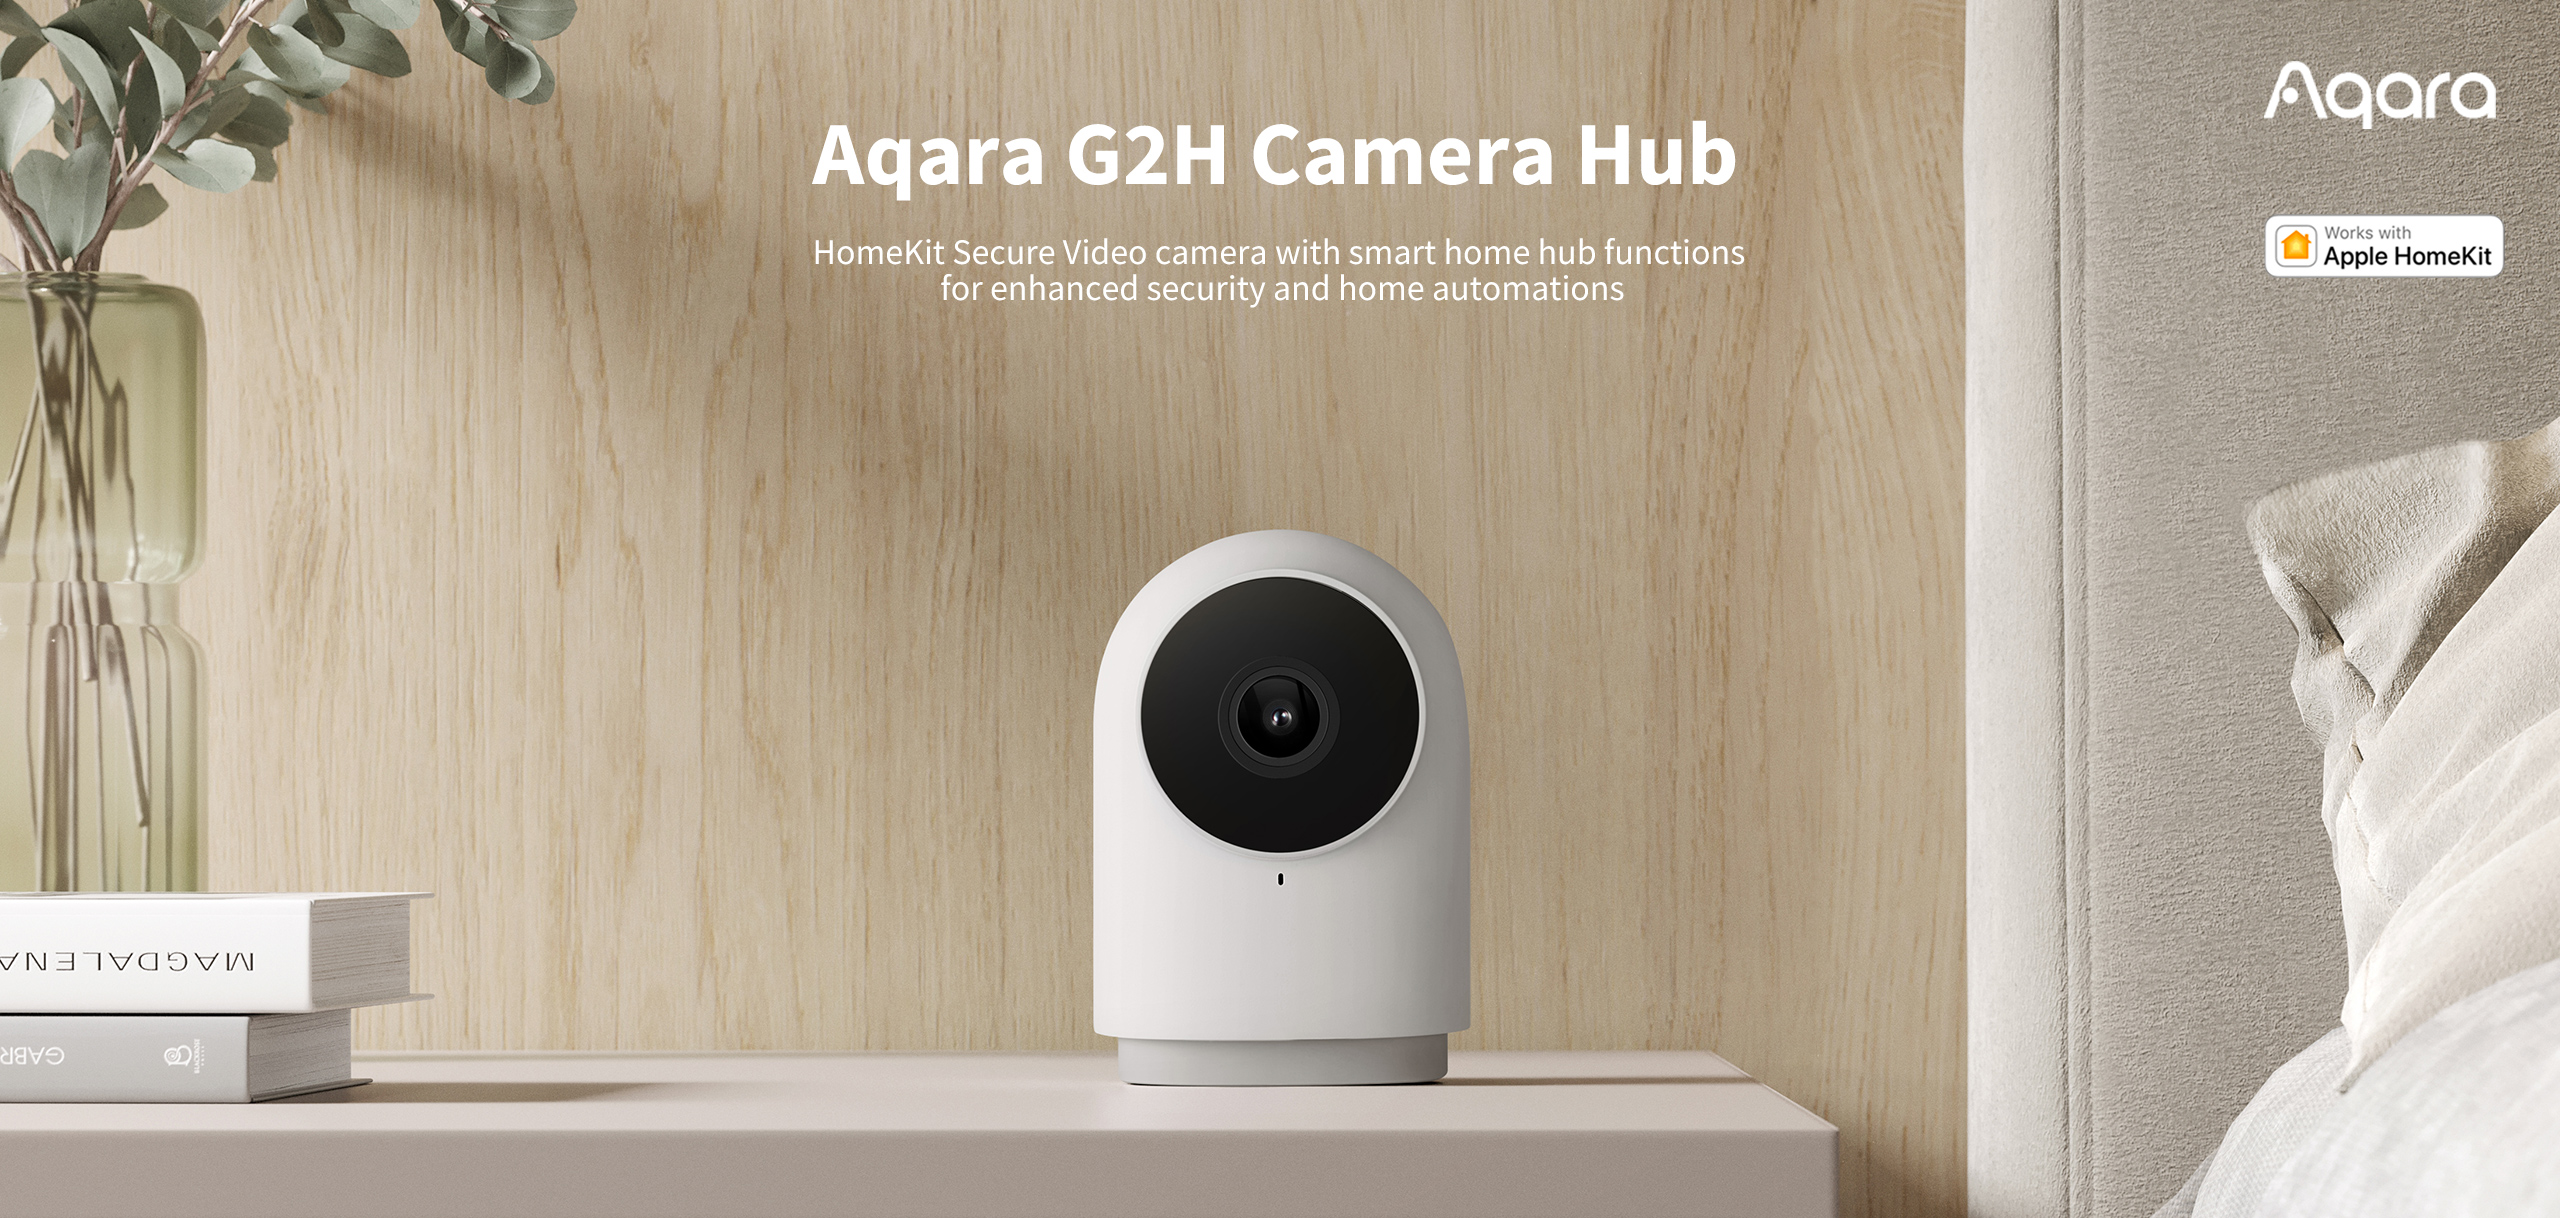 Aqara G2H Camera Hub